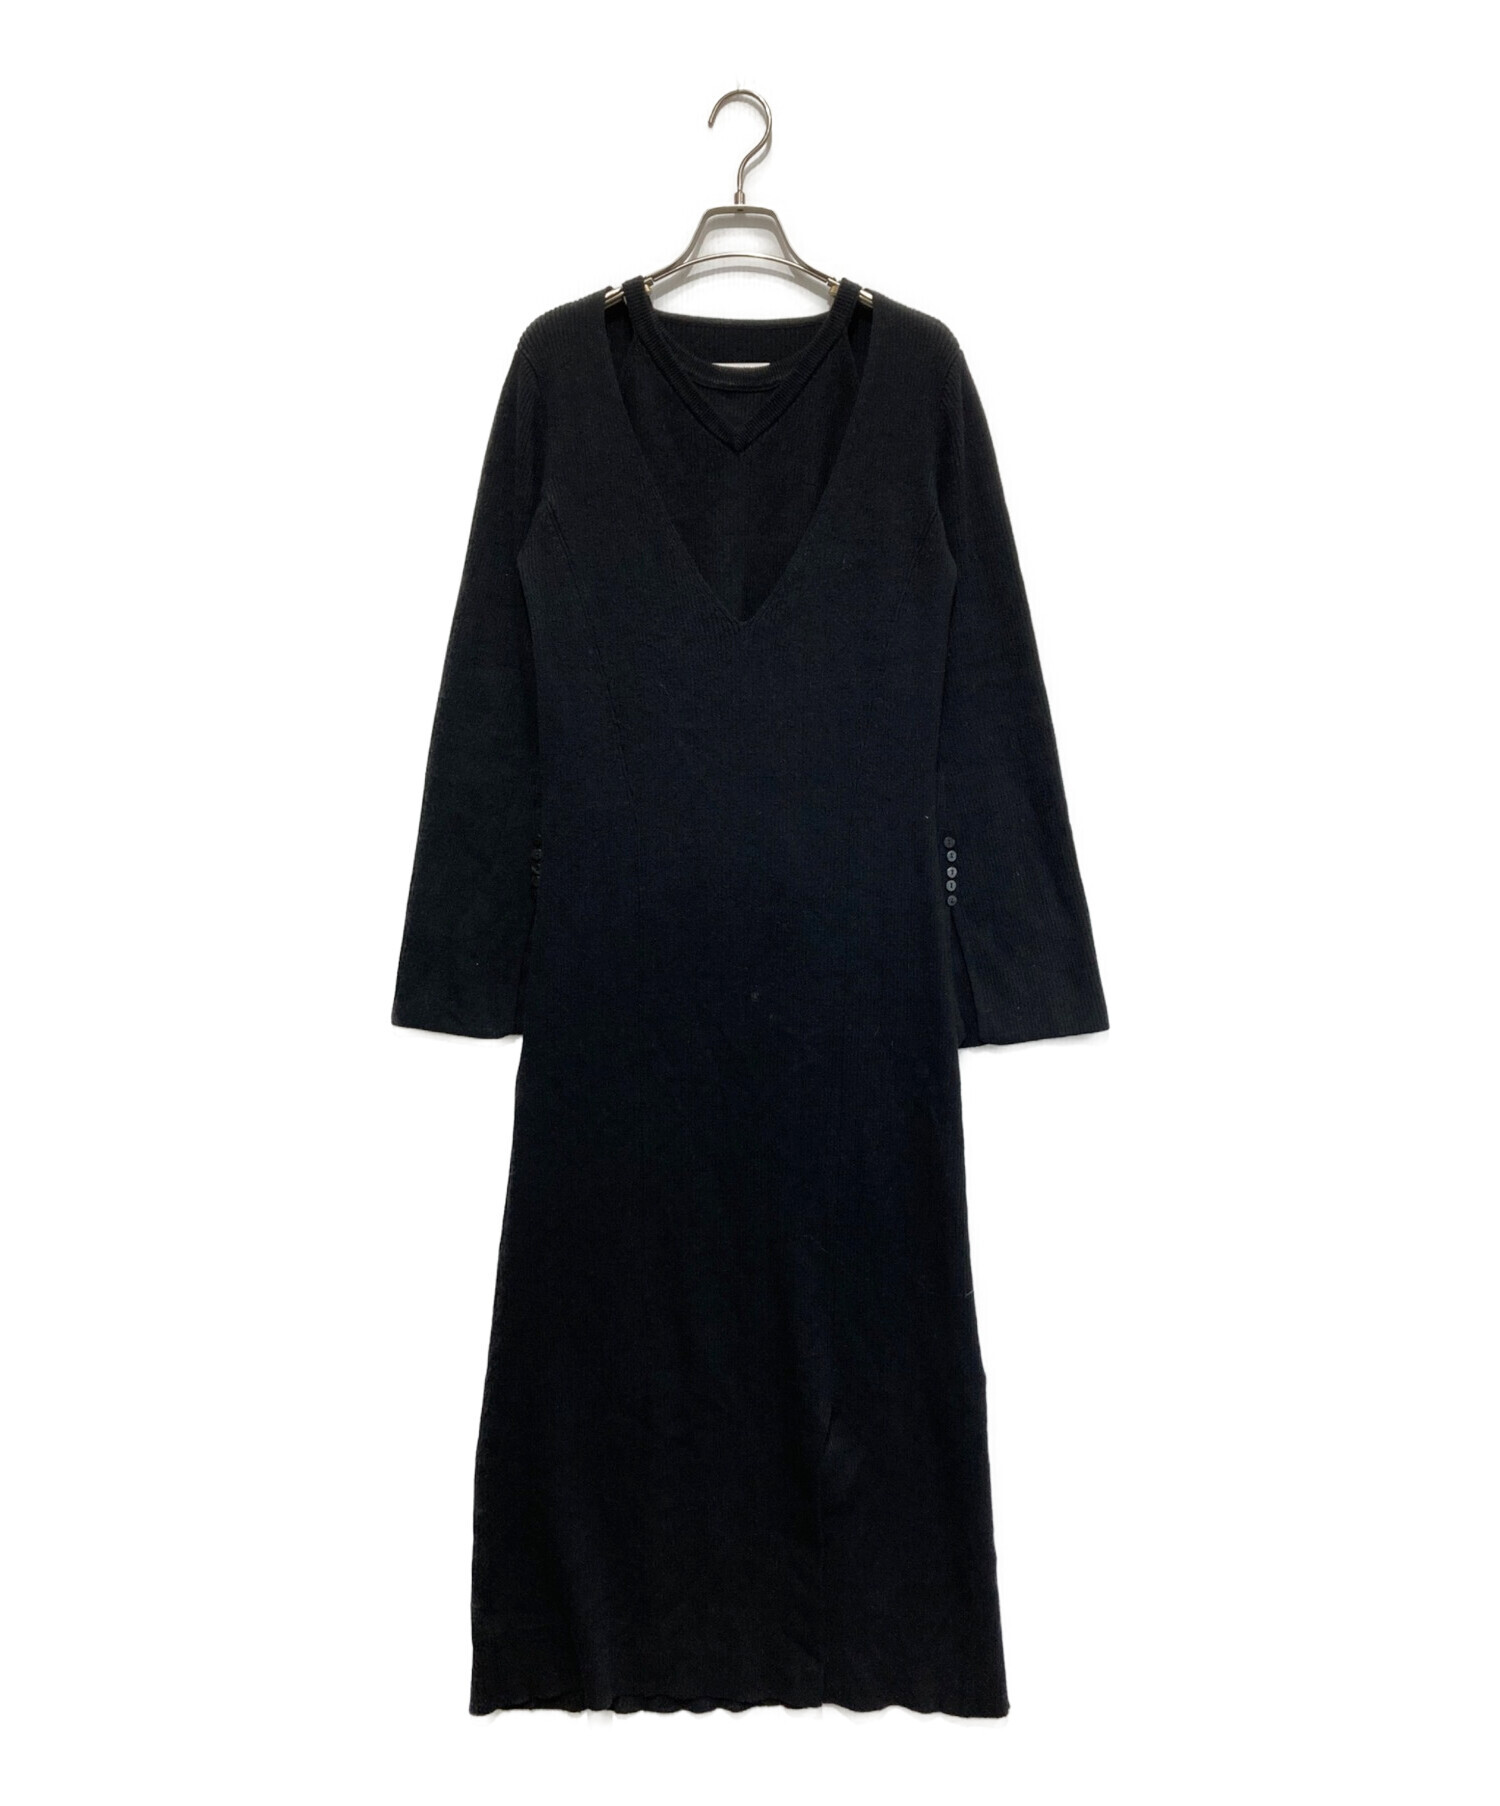 Ameri (アメリ) AMERICAN SLEEVE LAYERED KNIT DRESS ブラック サイズ:SIZE M